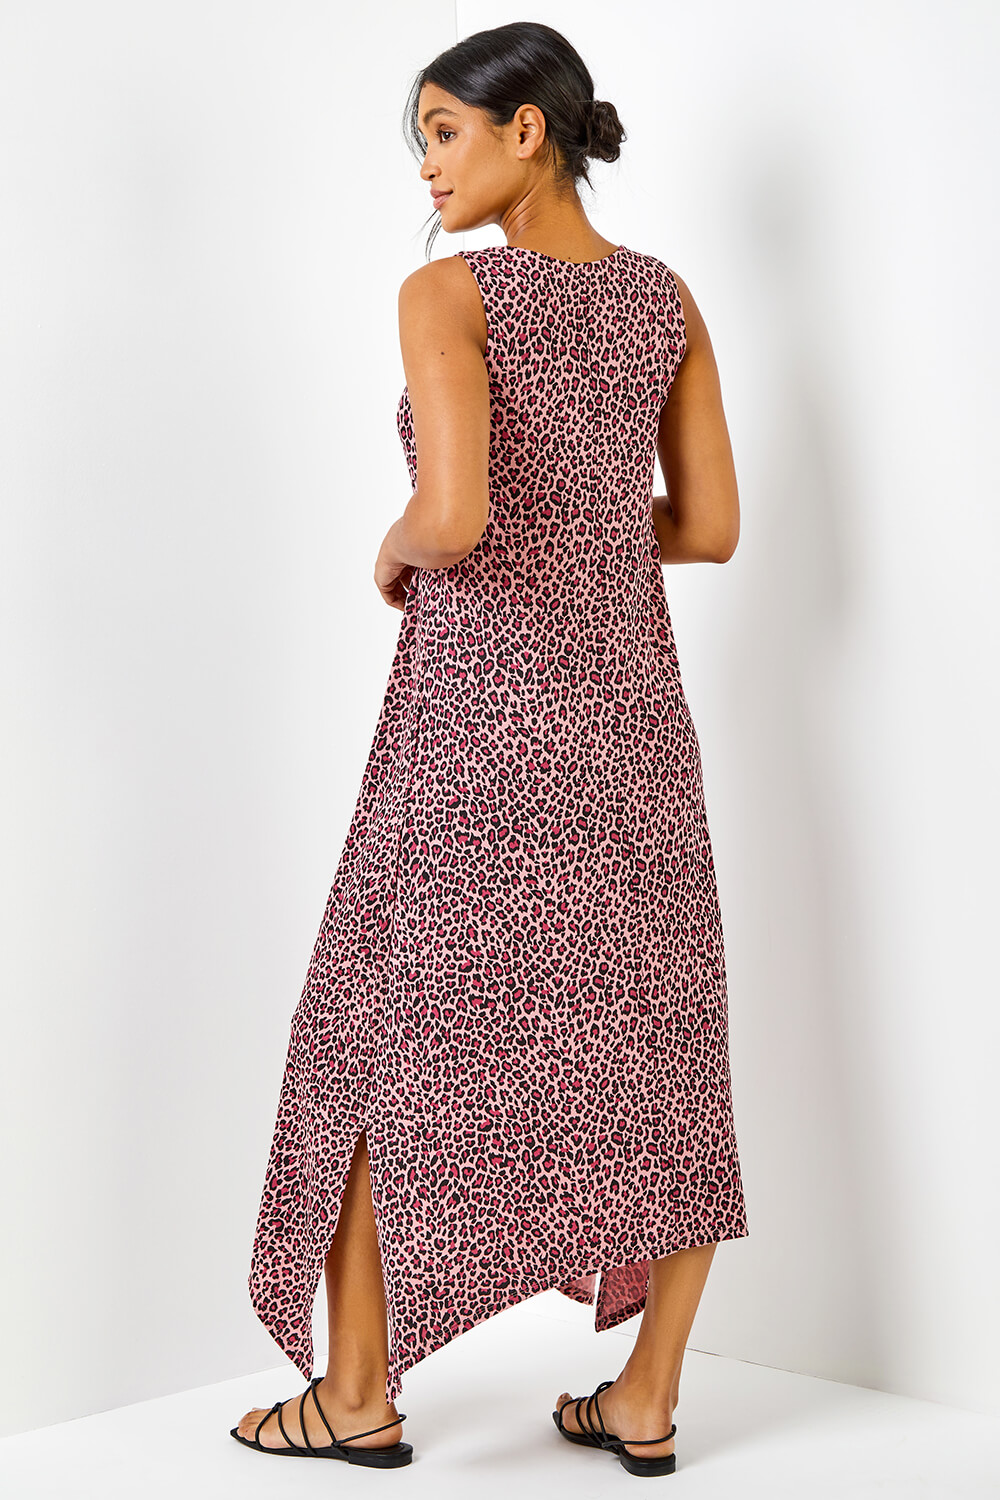 PINK Cheetah Print Hanky Hem Maxi Dress, Image 2 of 5